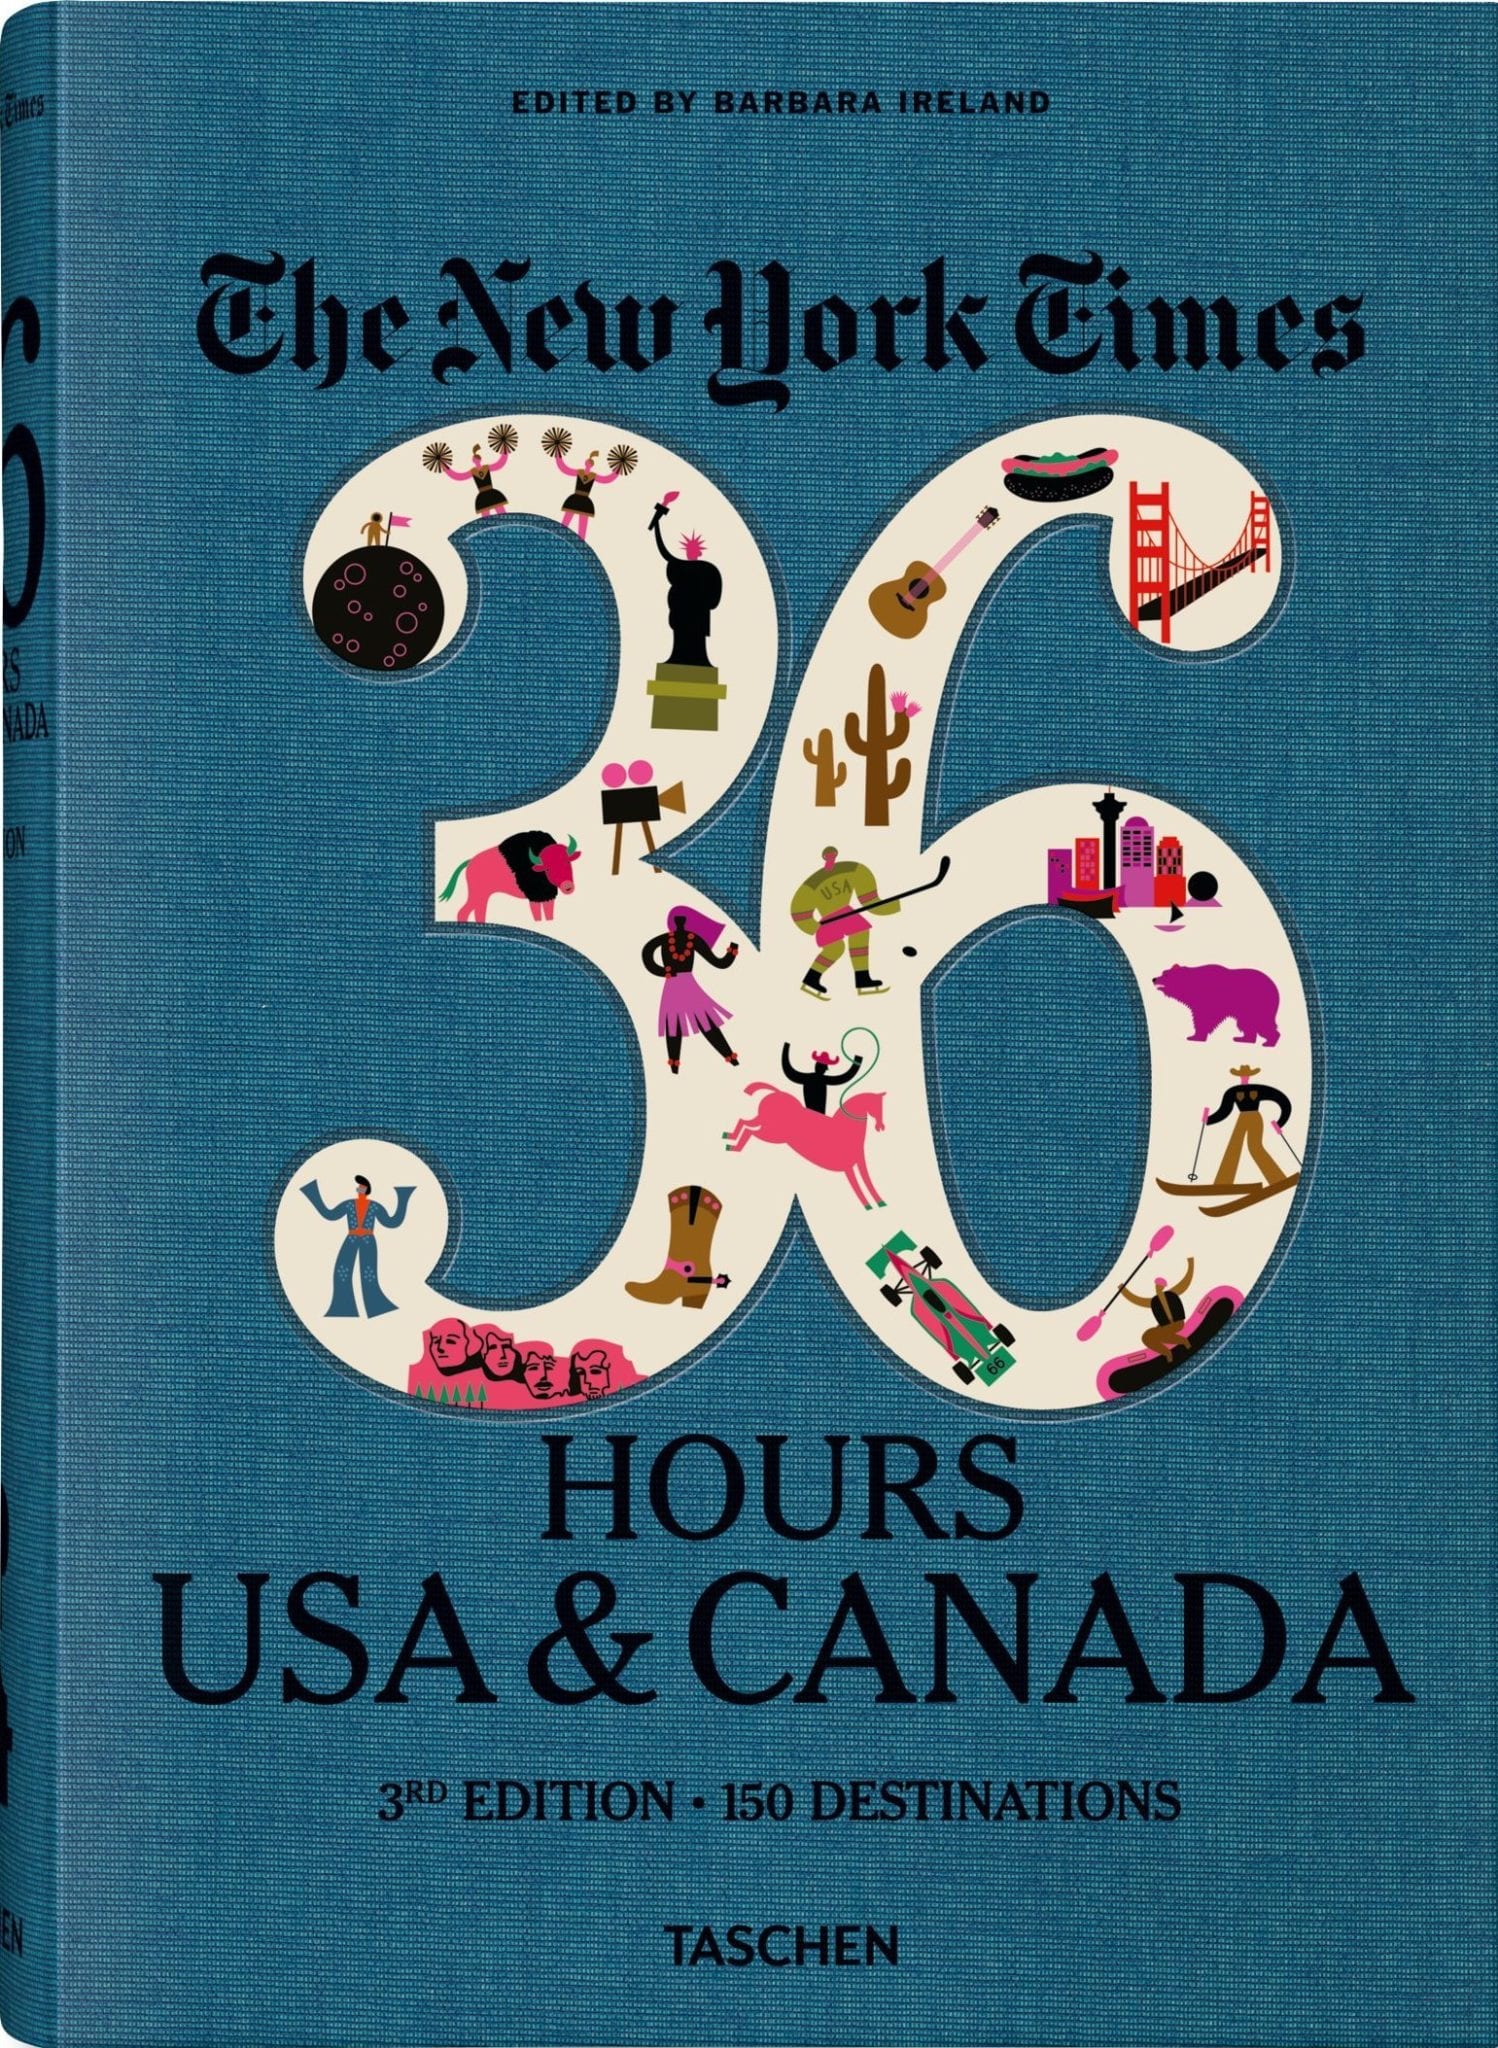 The NY Times 36 Hours - USA & Canada